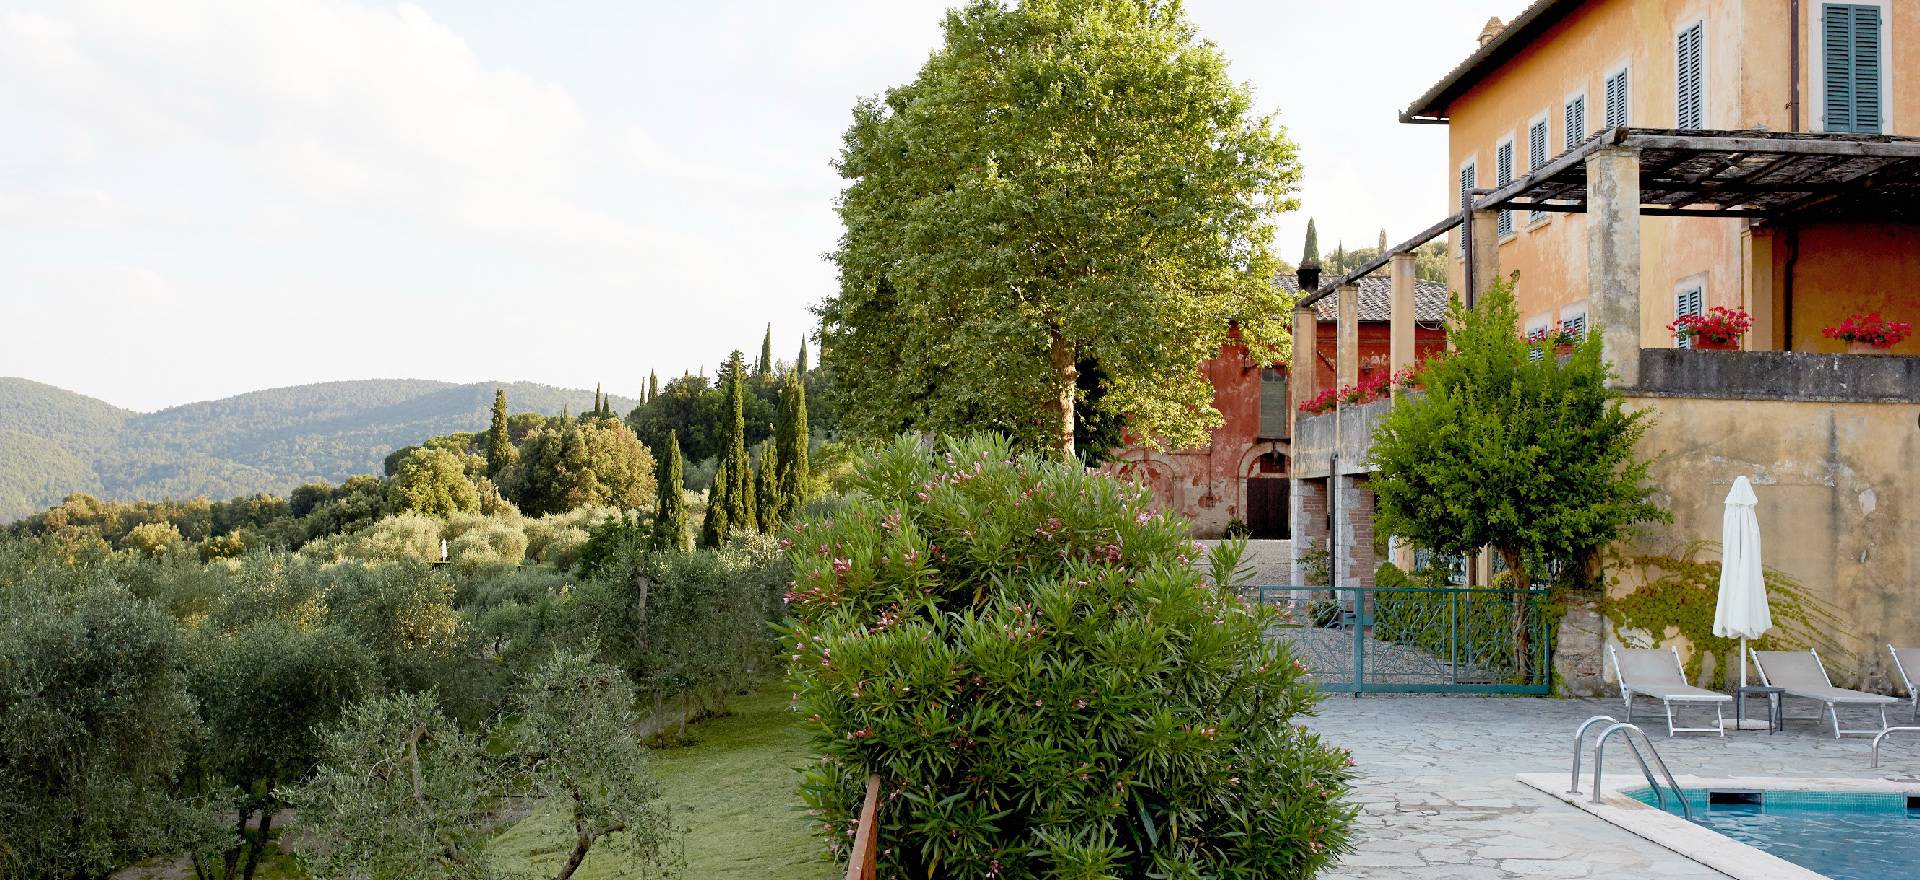 Agriturismo Toscana Perla nascosta in Toscana vicino a Siena